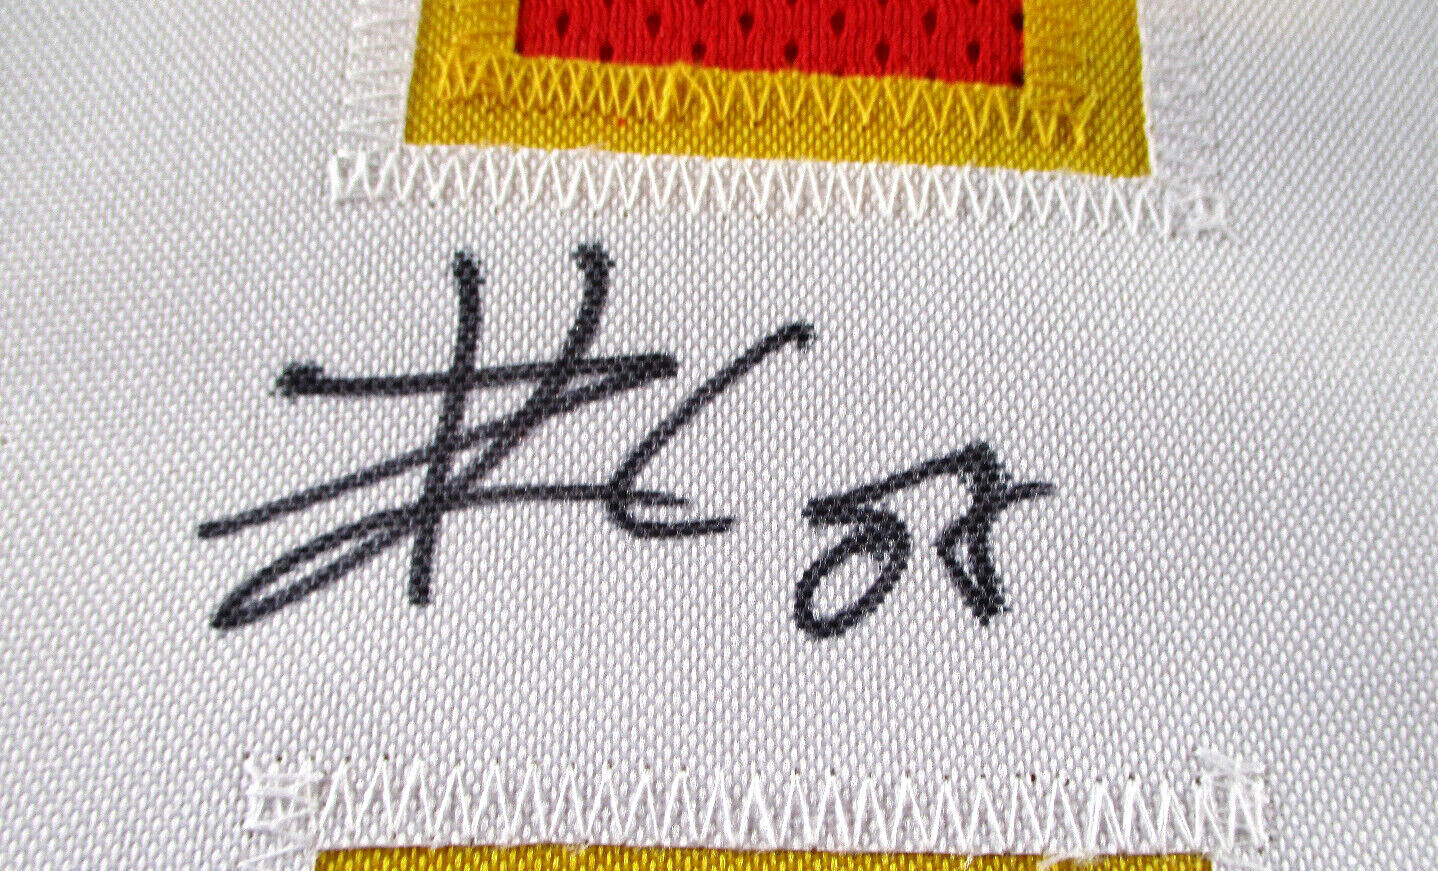 Travis Kelce / Autographed Kansas City Chiefs Red Custom Football Jersey / COA